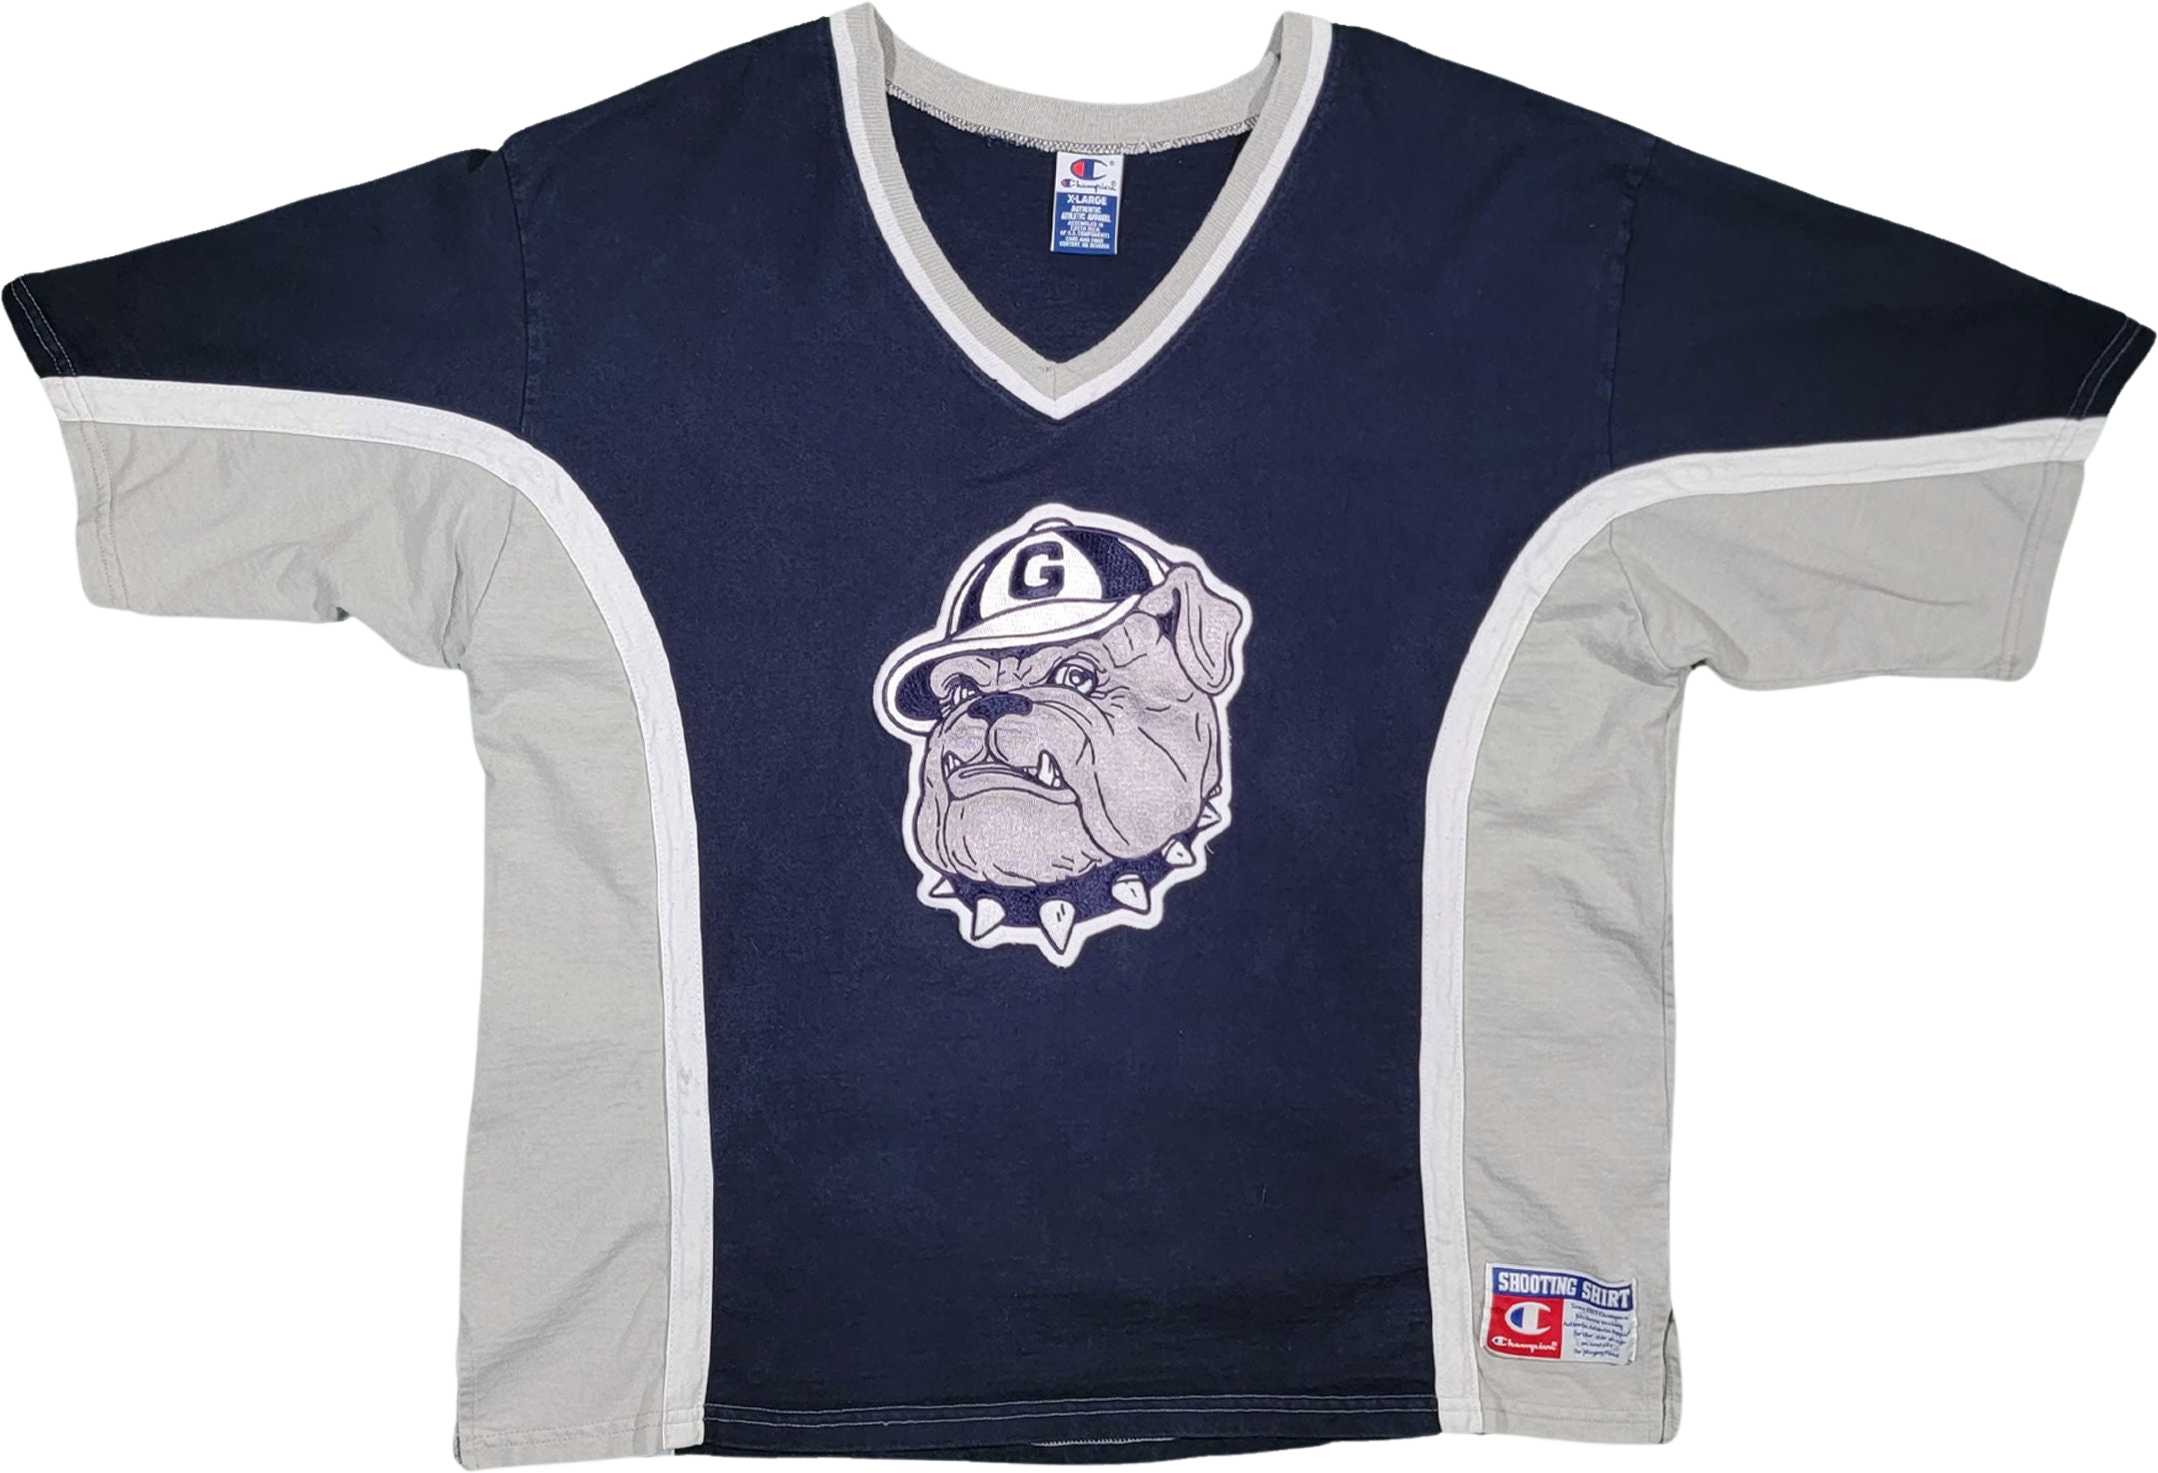 Vintage Georgetown Snap Button Warm-up Basketball Jersey Shirt Size L